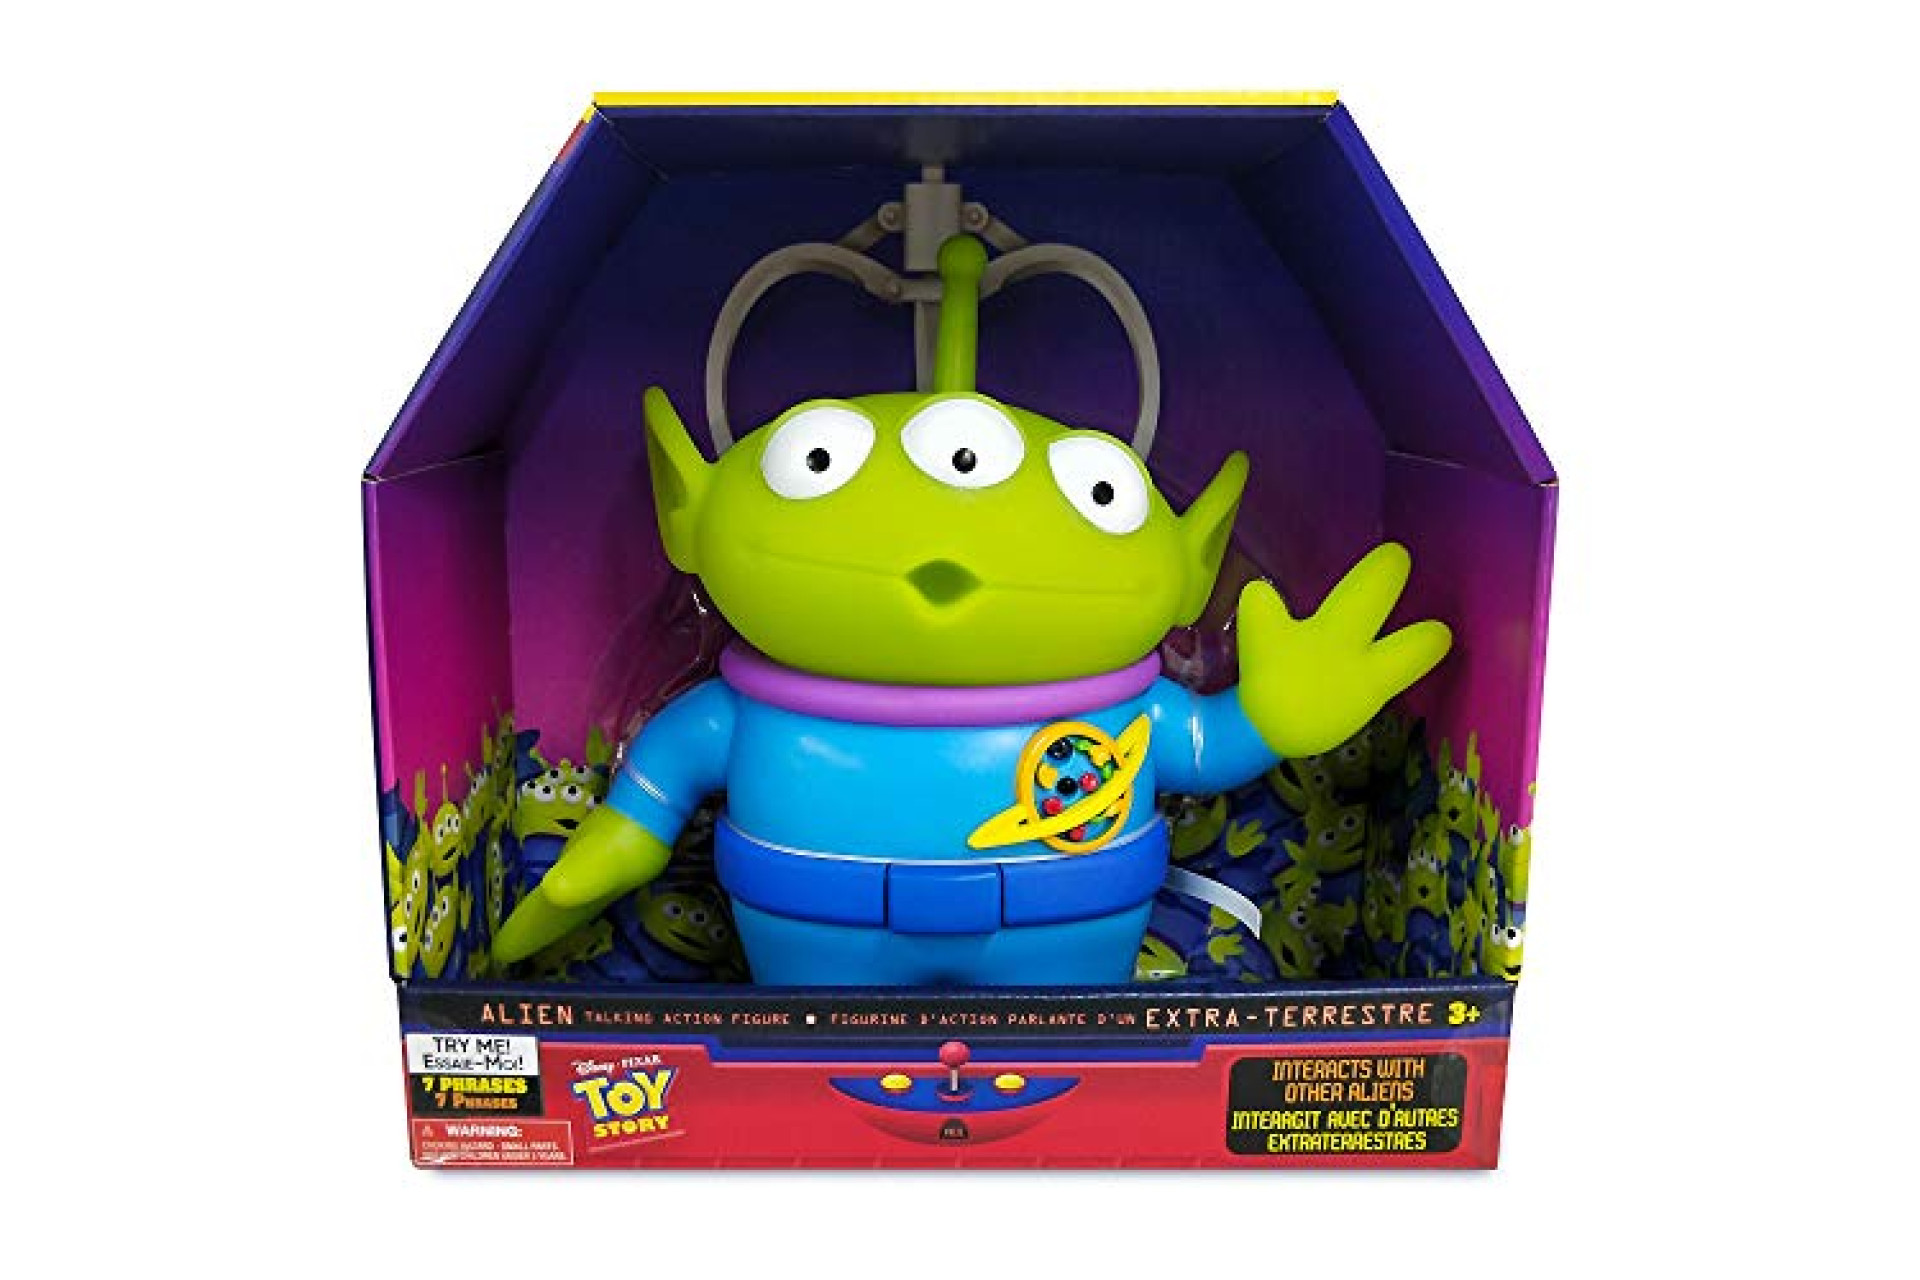 Acheter Disney Store Figurine Alien parlante Toy Story, 25,5 cm